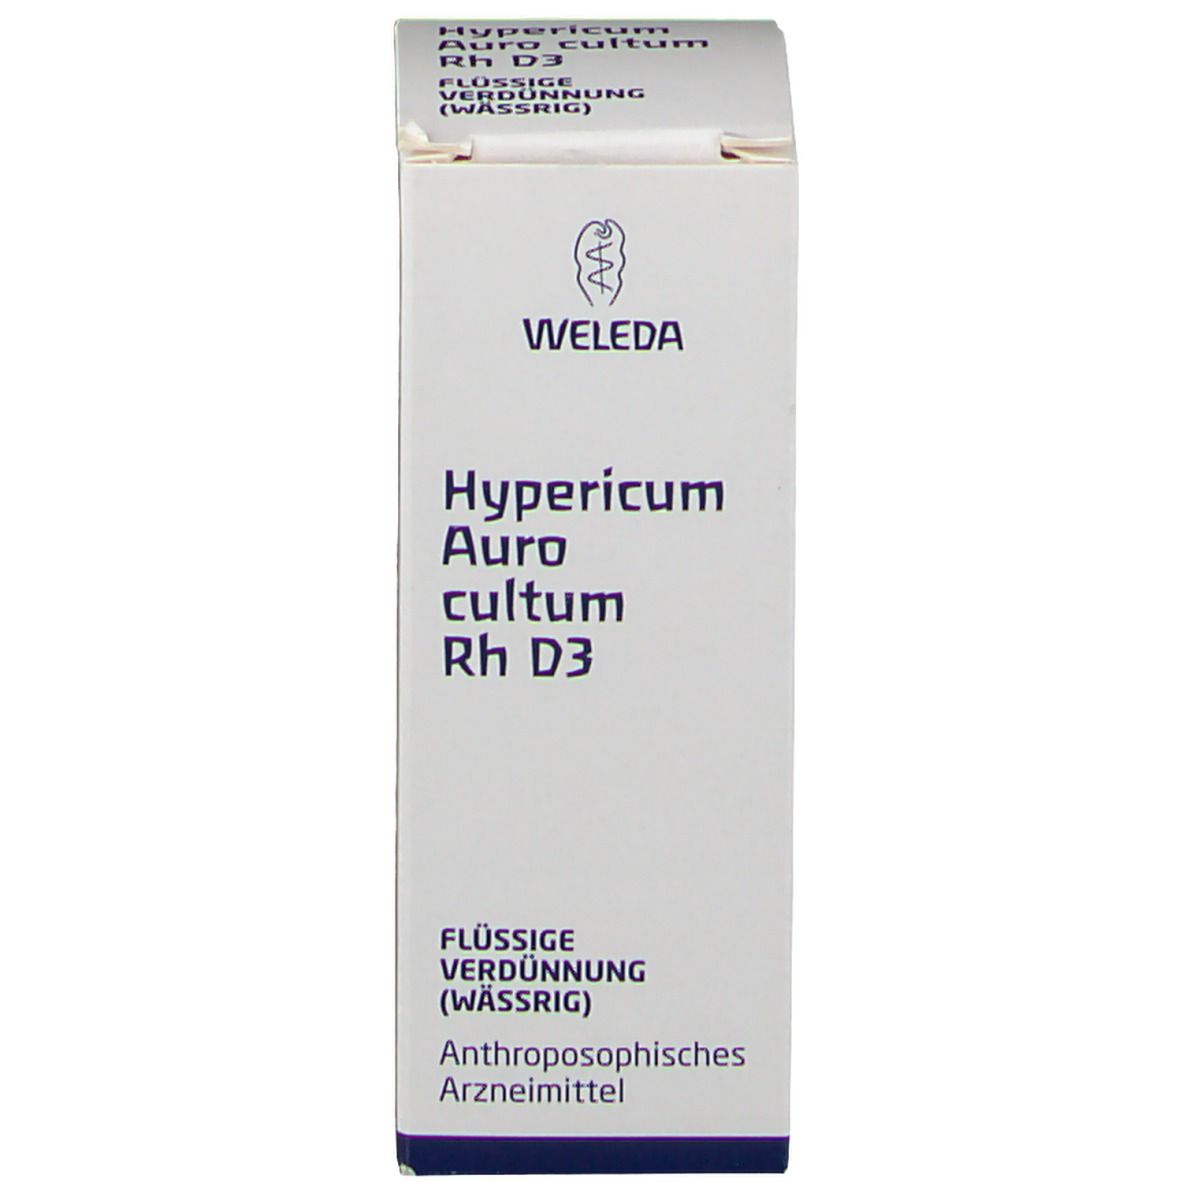 Hypericum Auro cultum Rh D3